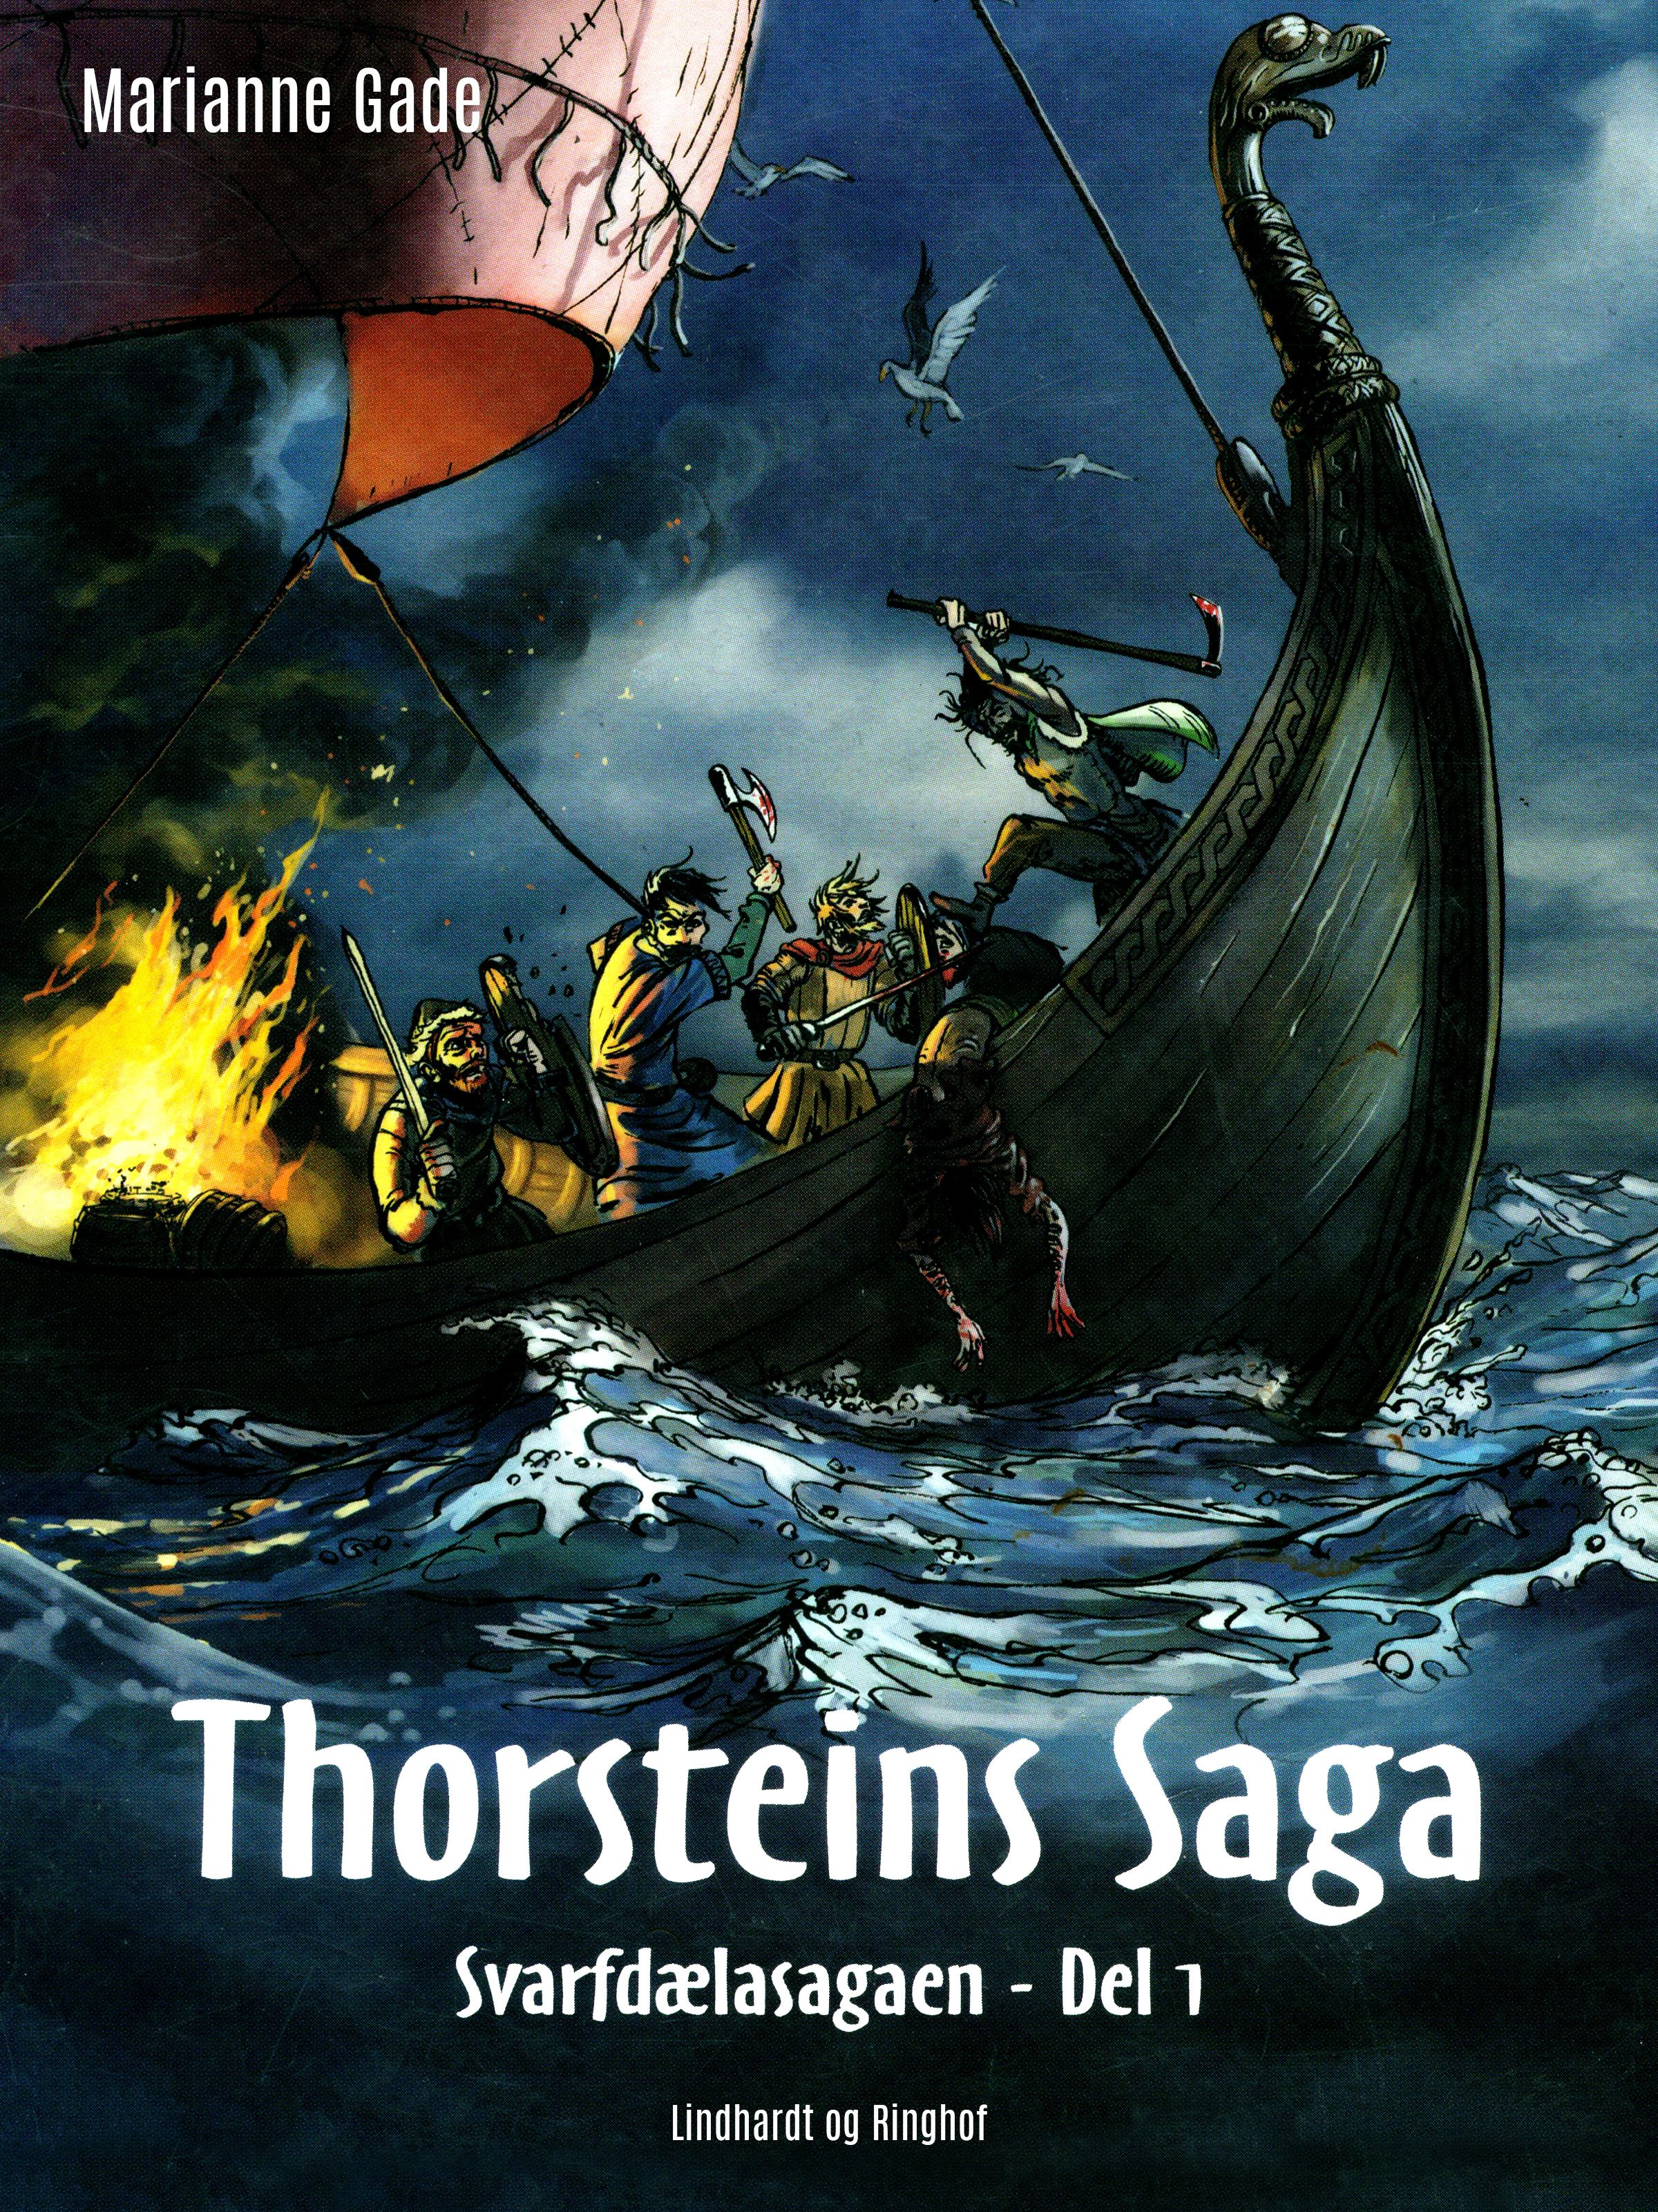 Thorsteins saga, e-bok av Marianne Gade